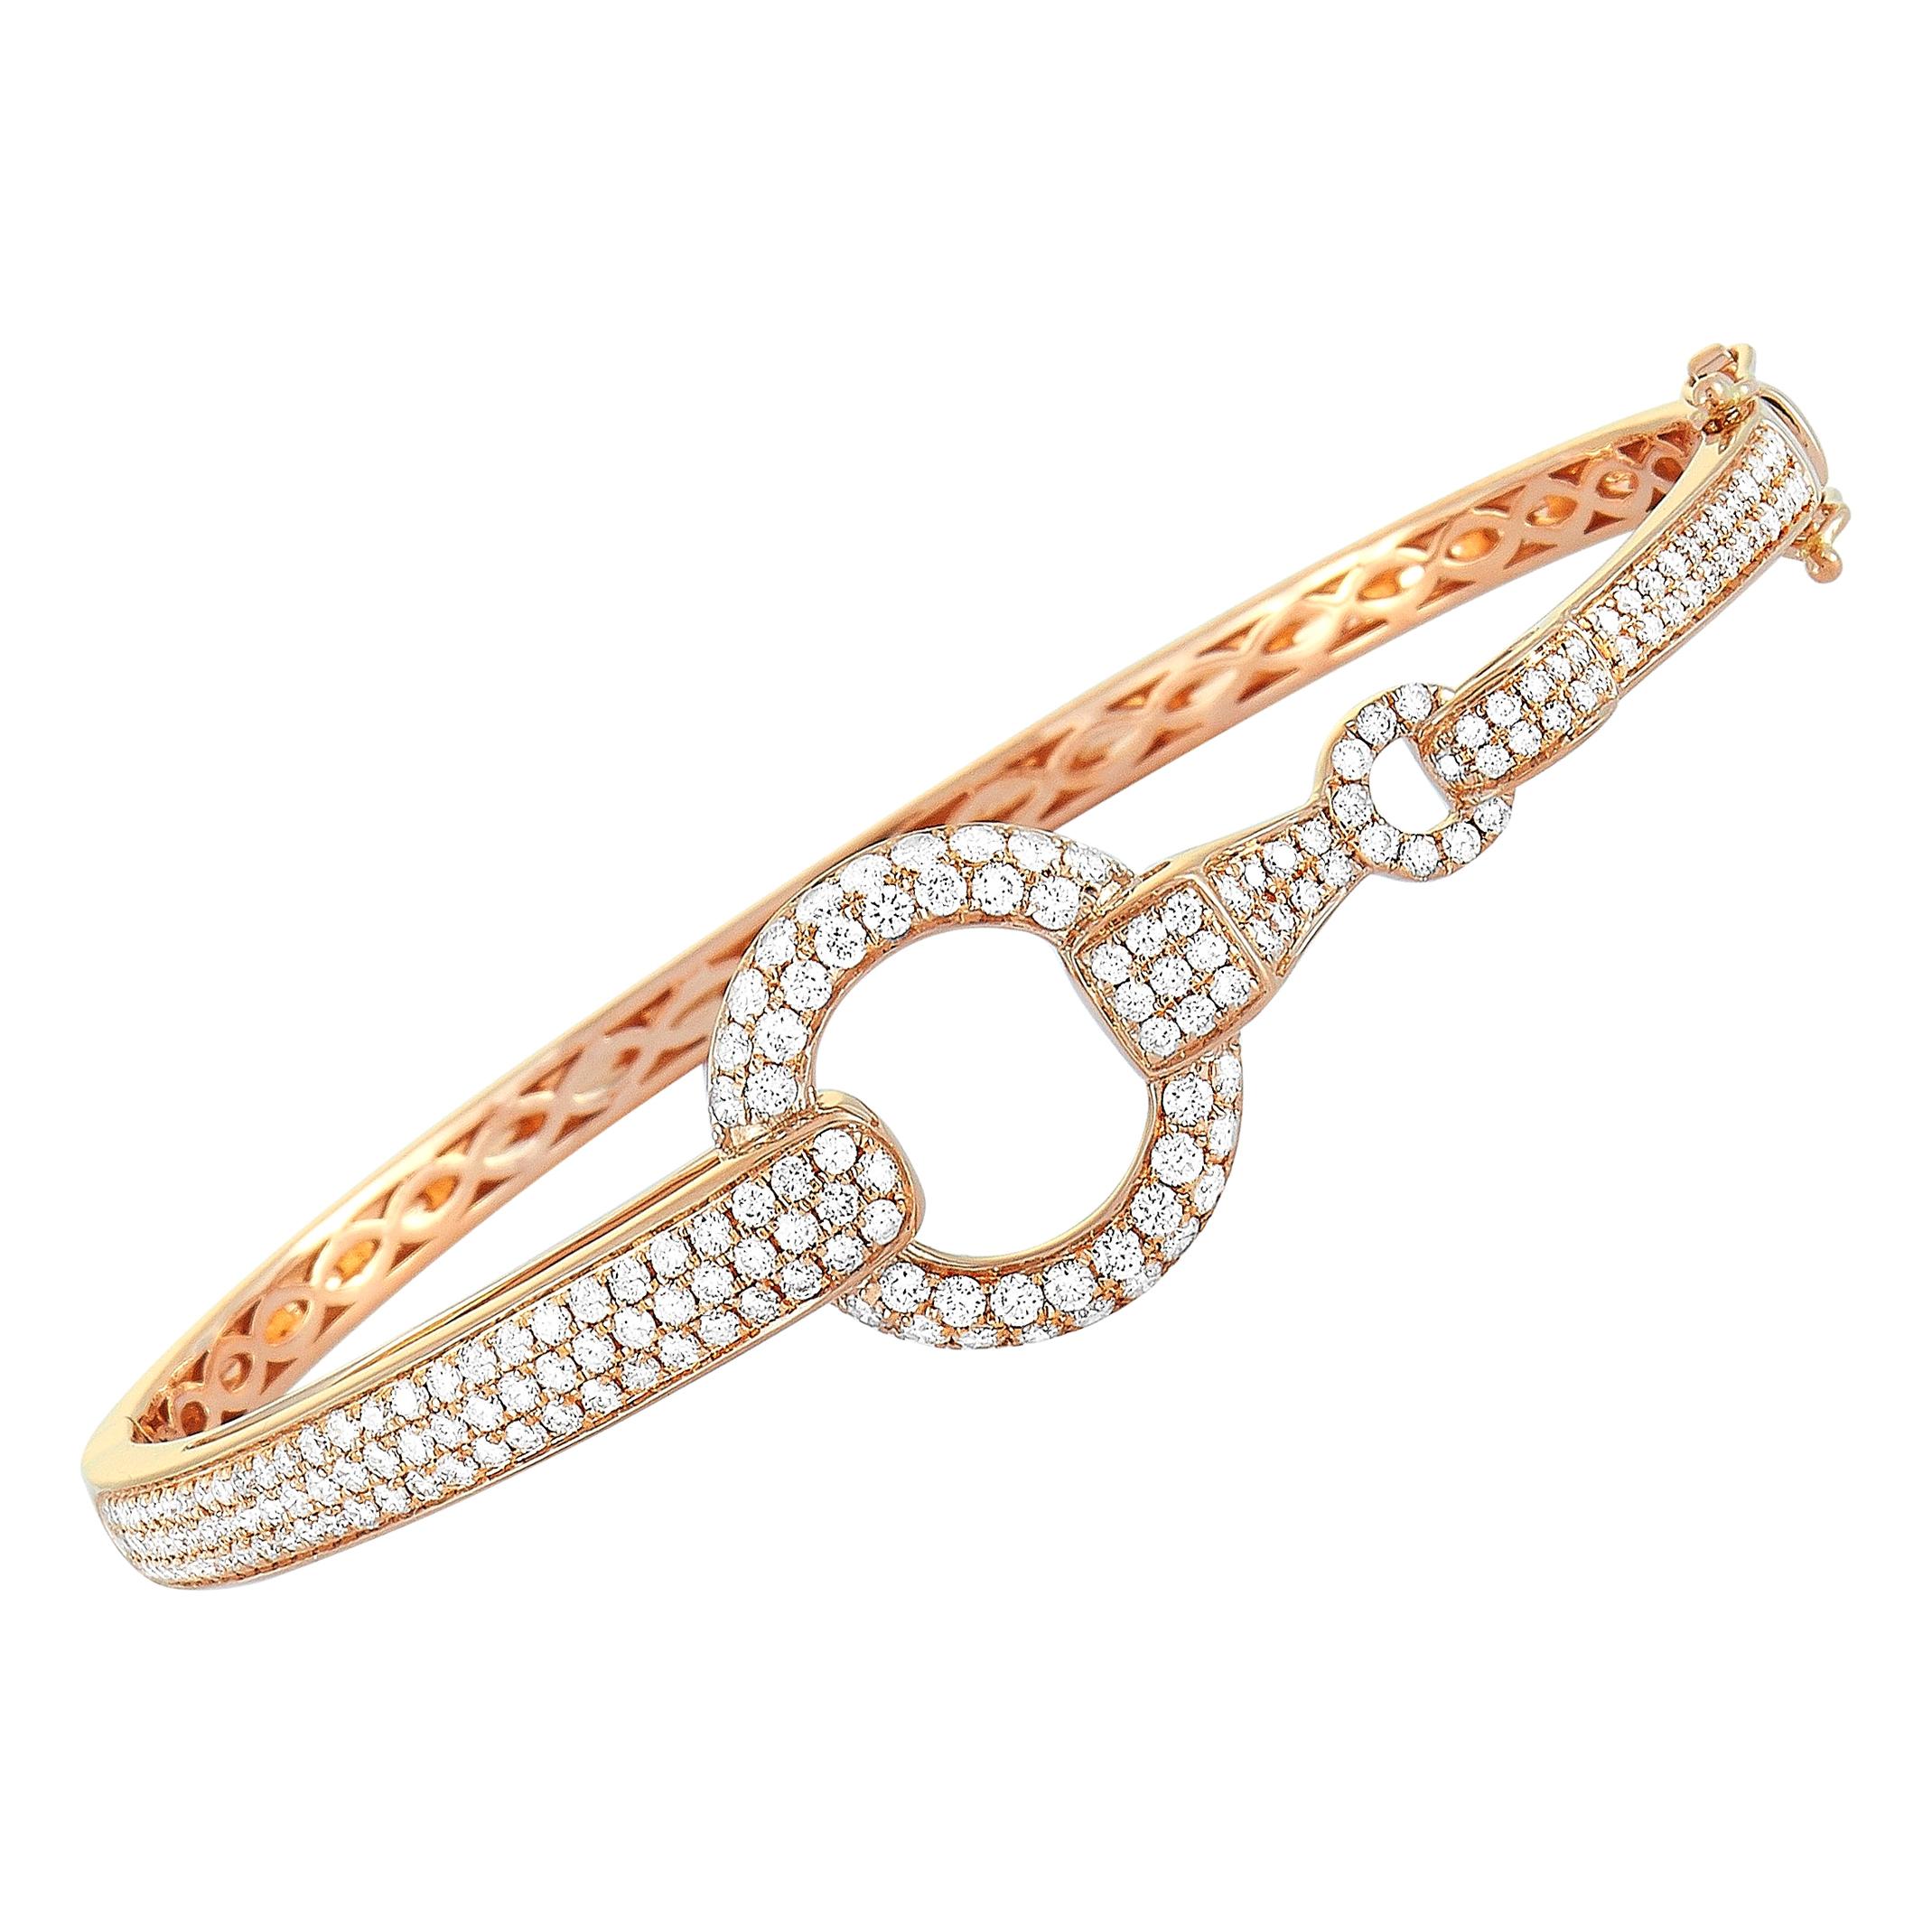 LB Exclusive 18 Karat Rose Gold, 1.70 Carat Diamond Bangle Bracelet